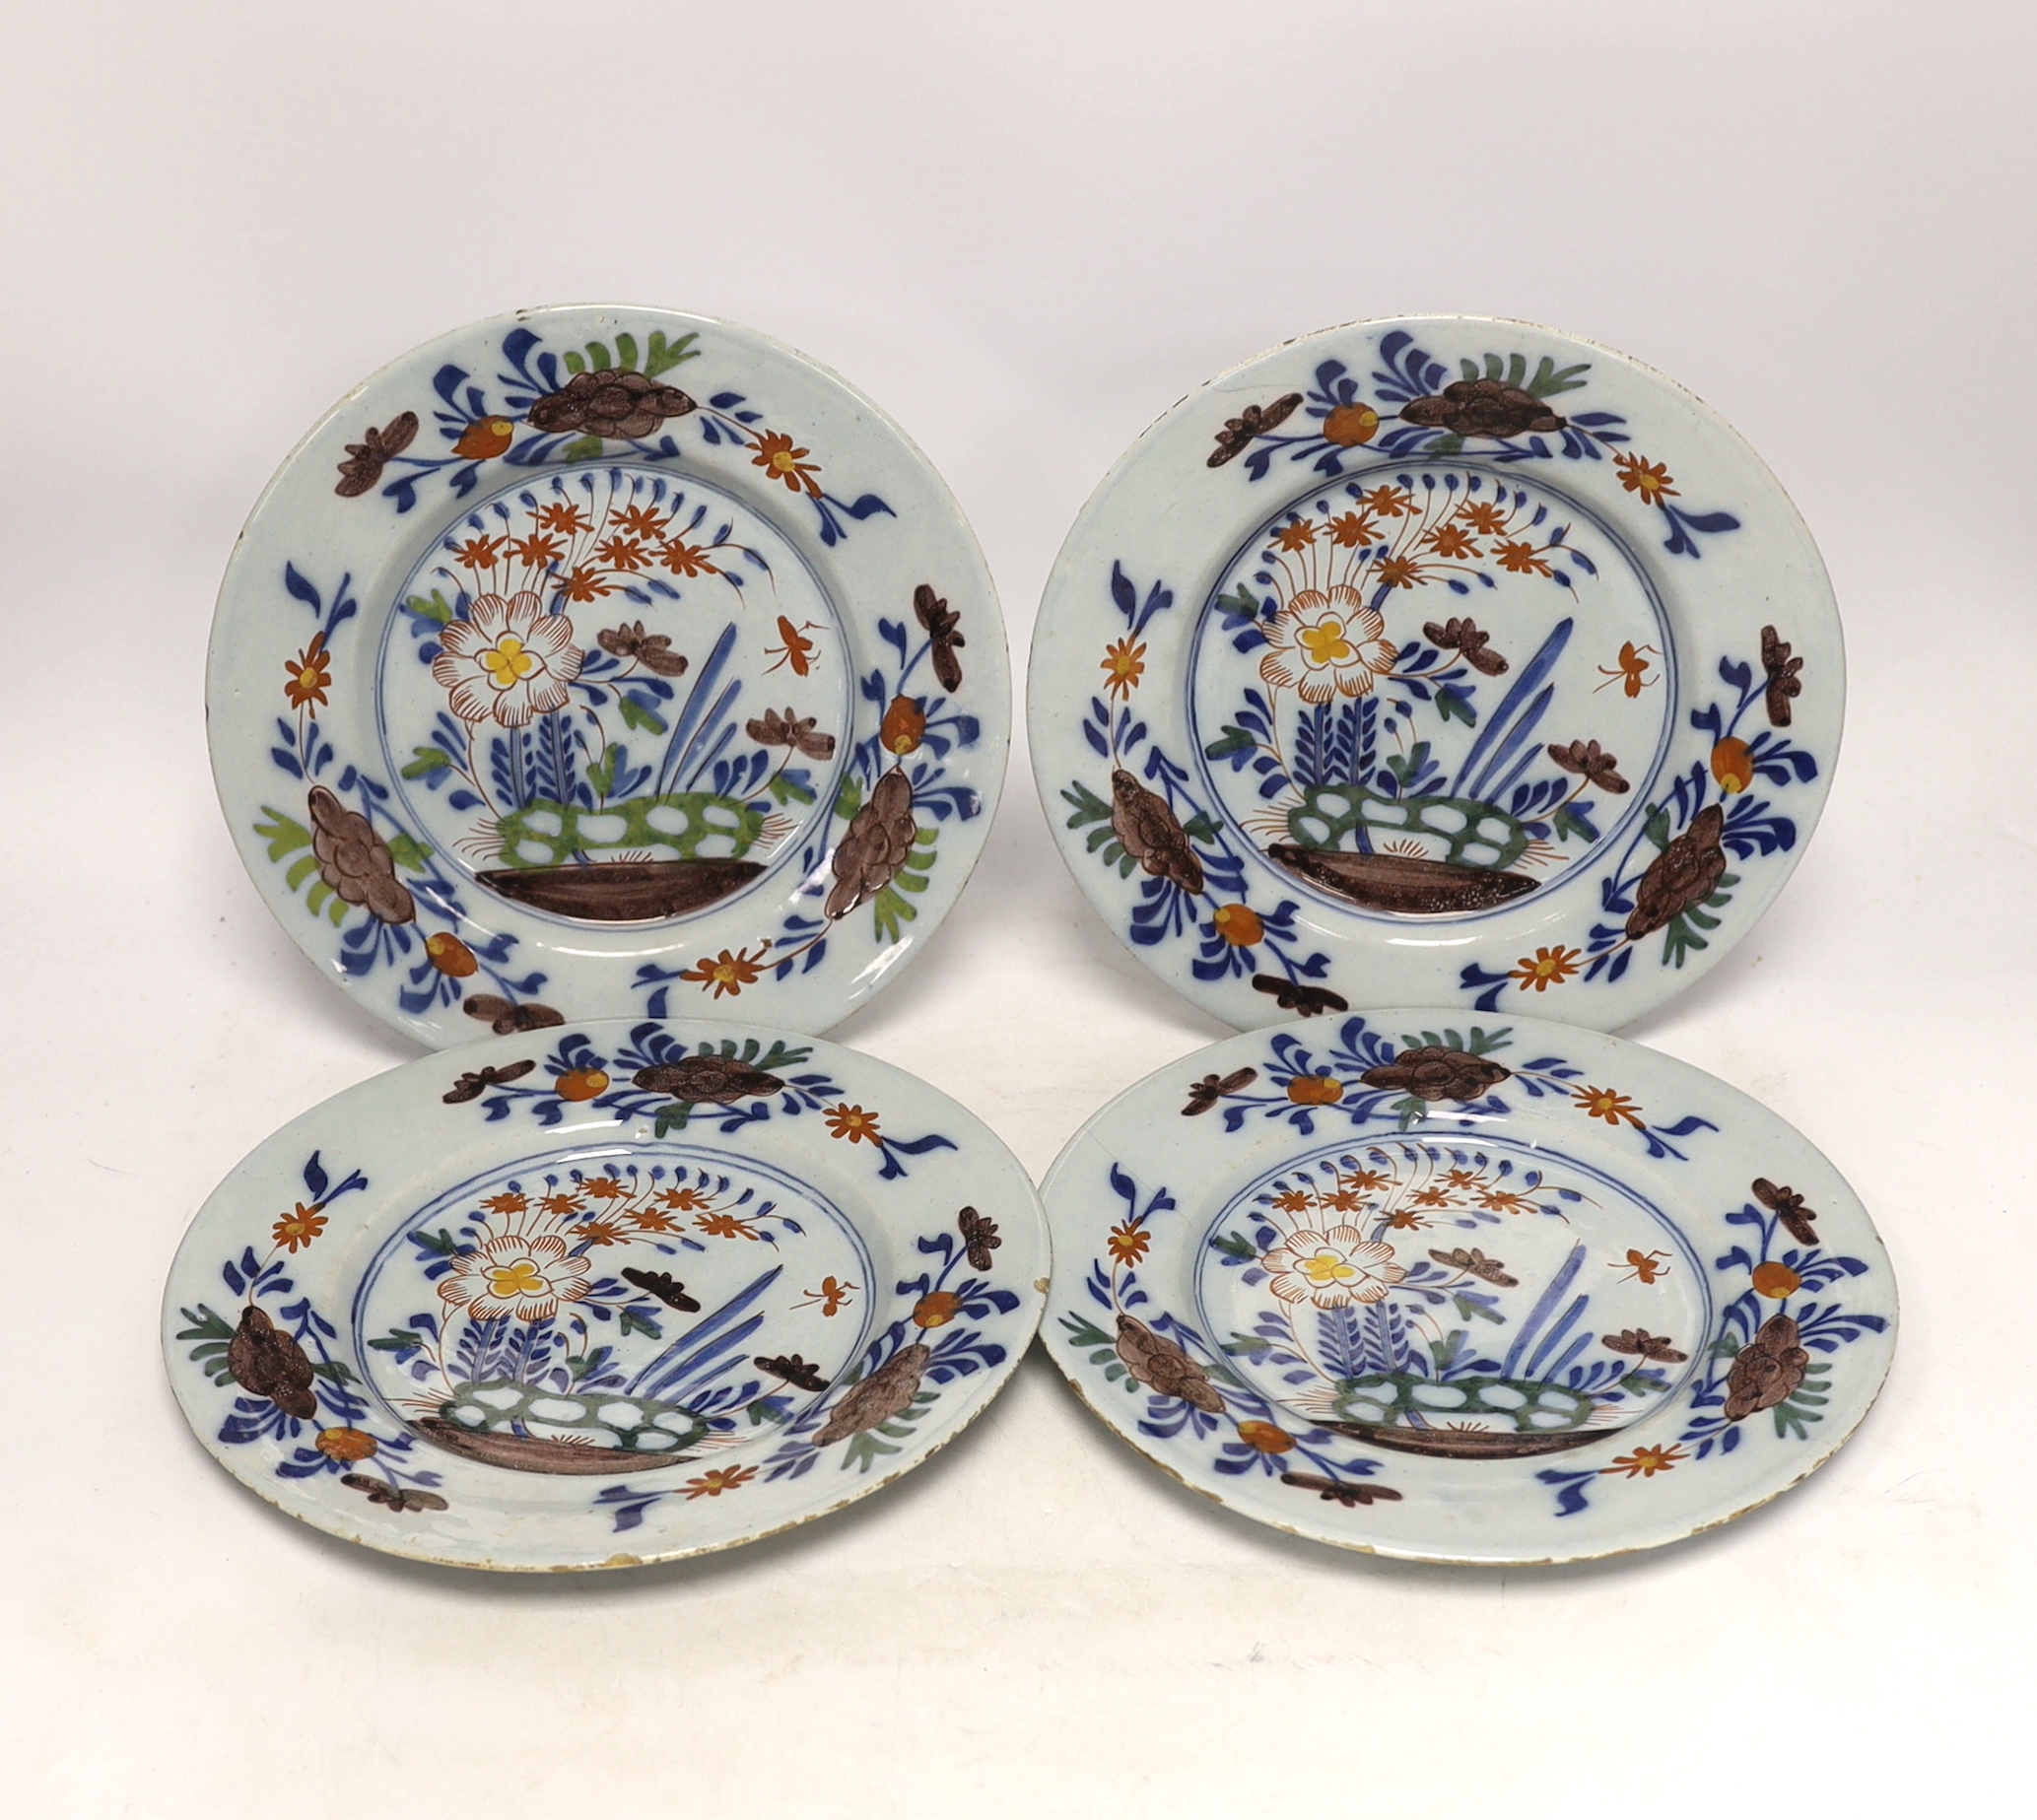 A set of four mid 18th century Delft polychrome floral plates, 22.5cm diameter